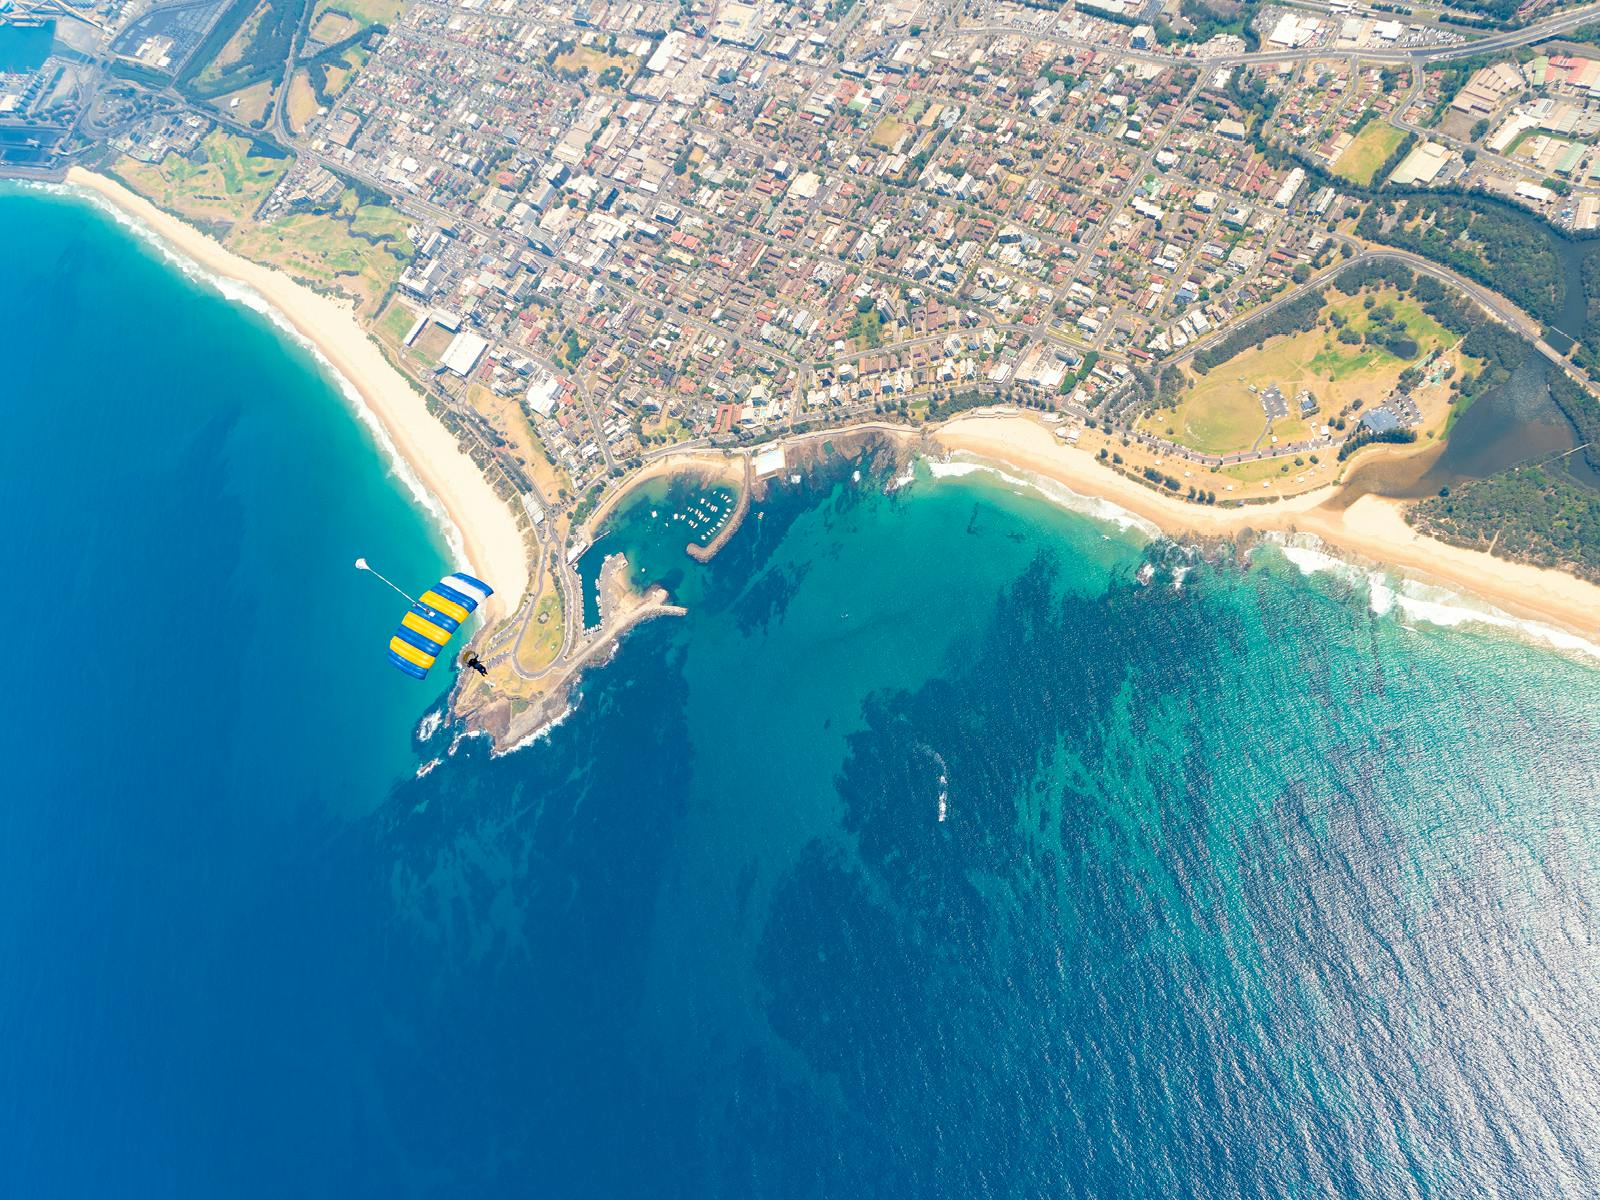 Fallschirmsprung-Erlebnis über Sydney-Wollongong